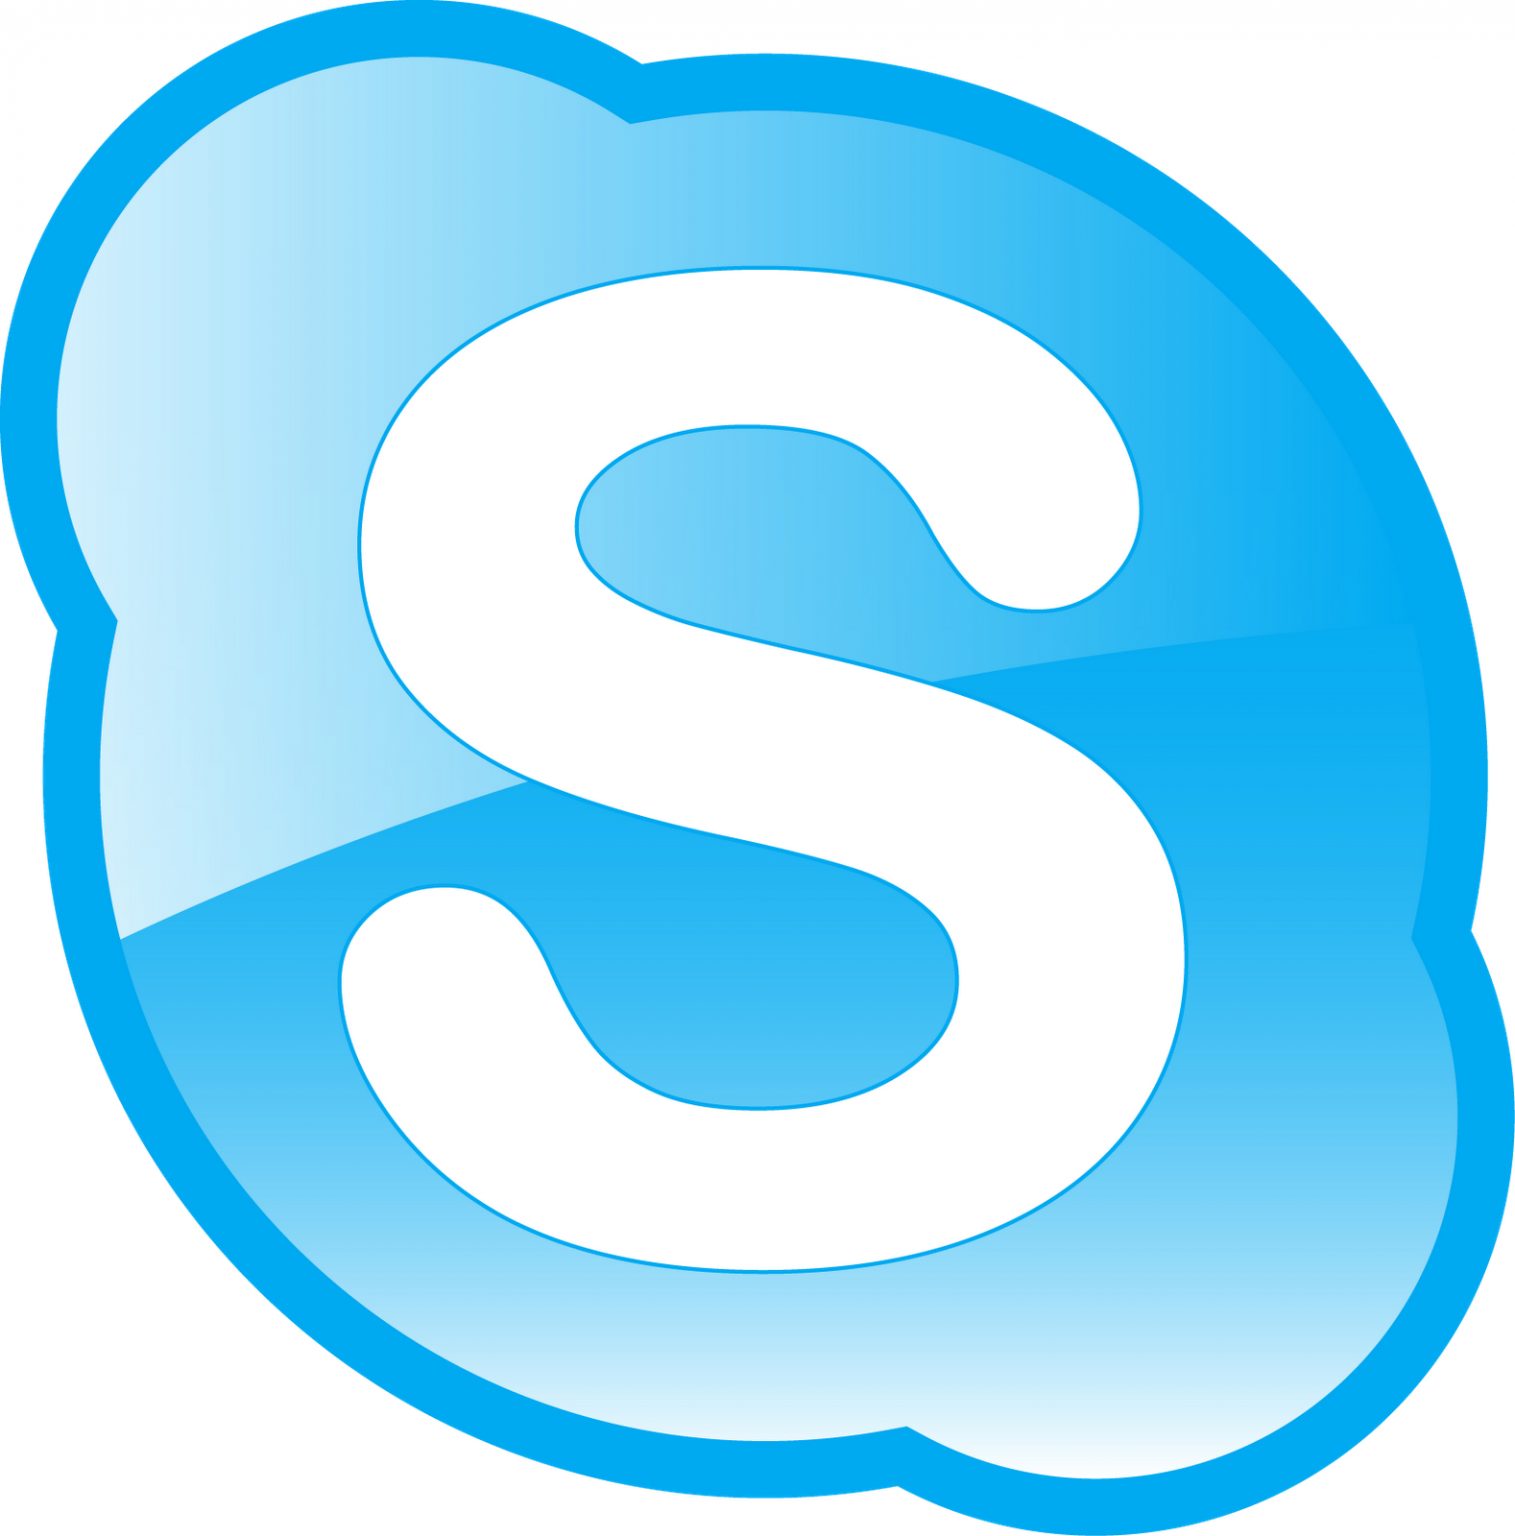 skype technologies